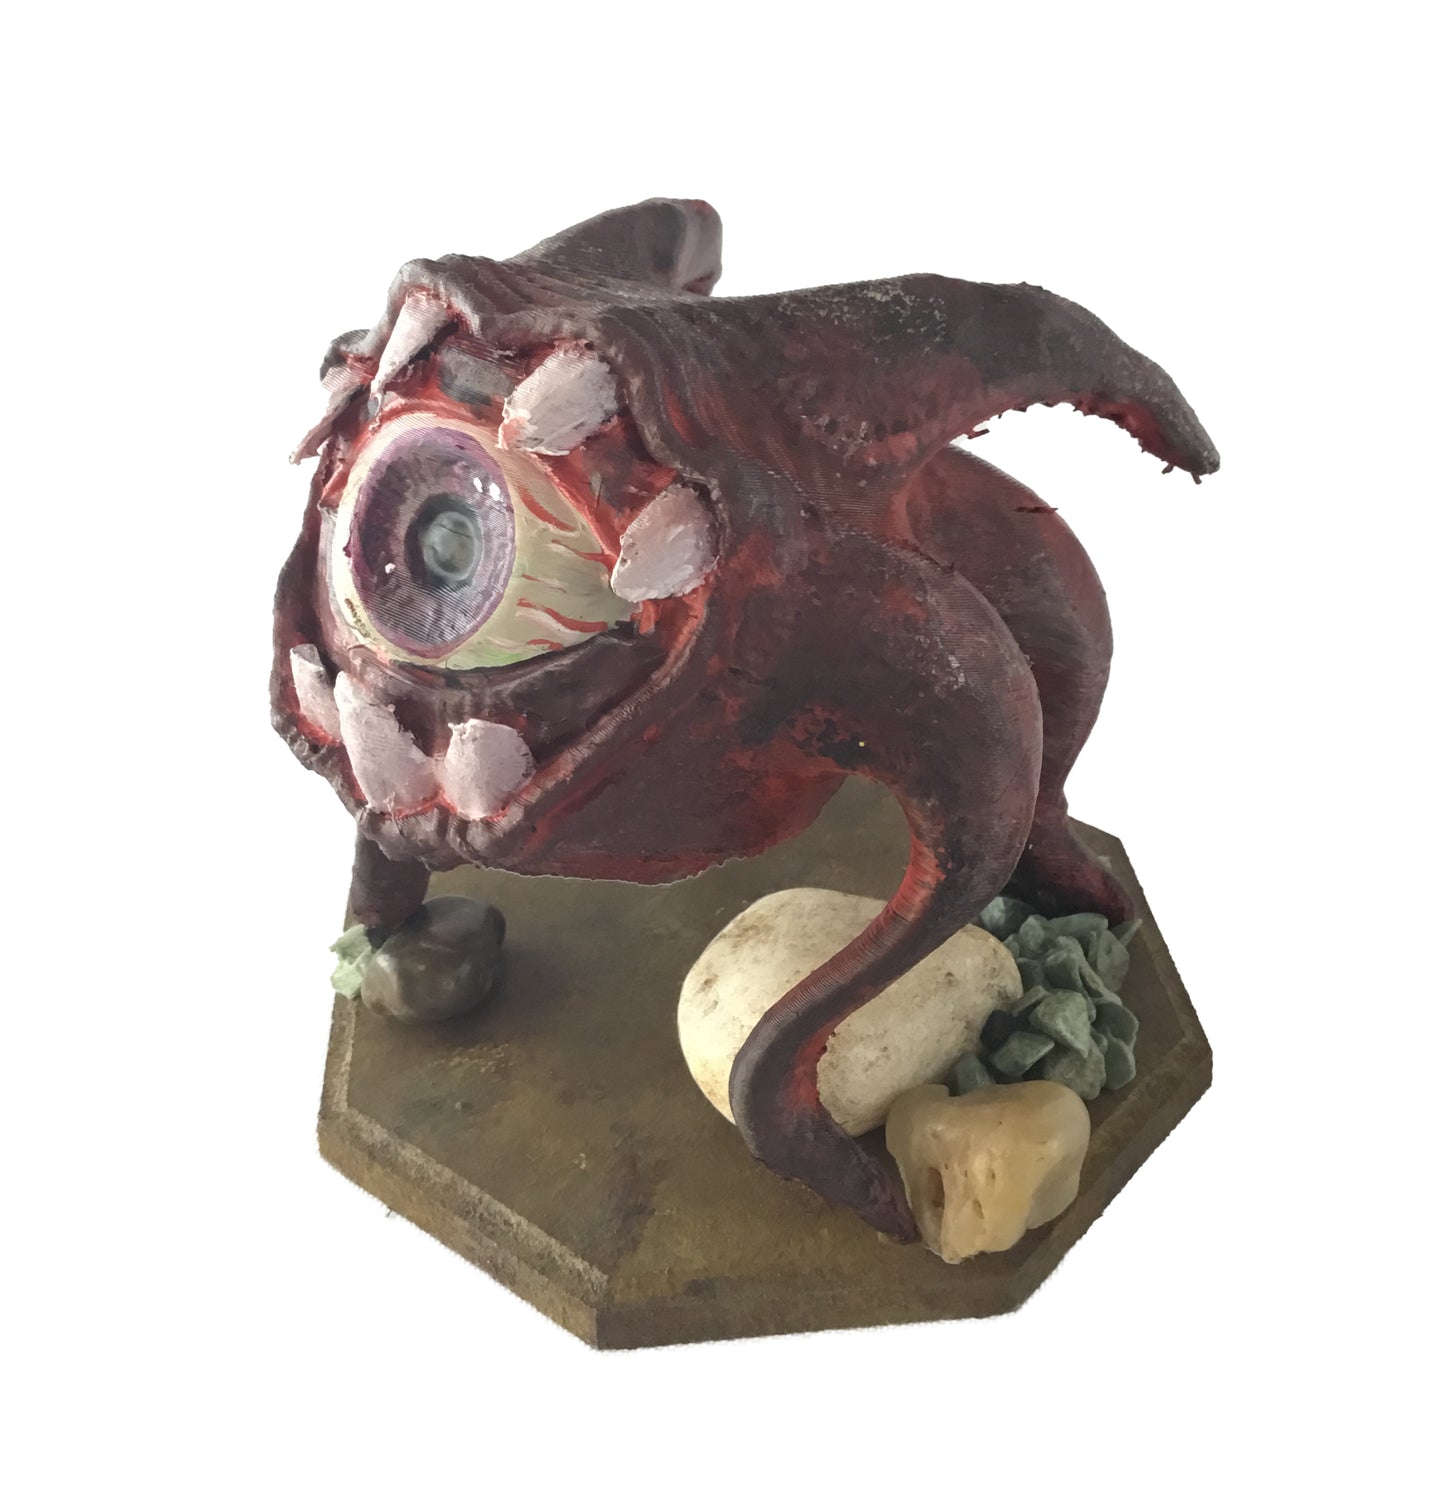 3D Printed Eyeball Monster - Painted